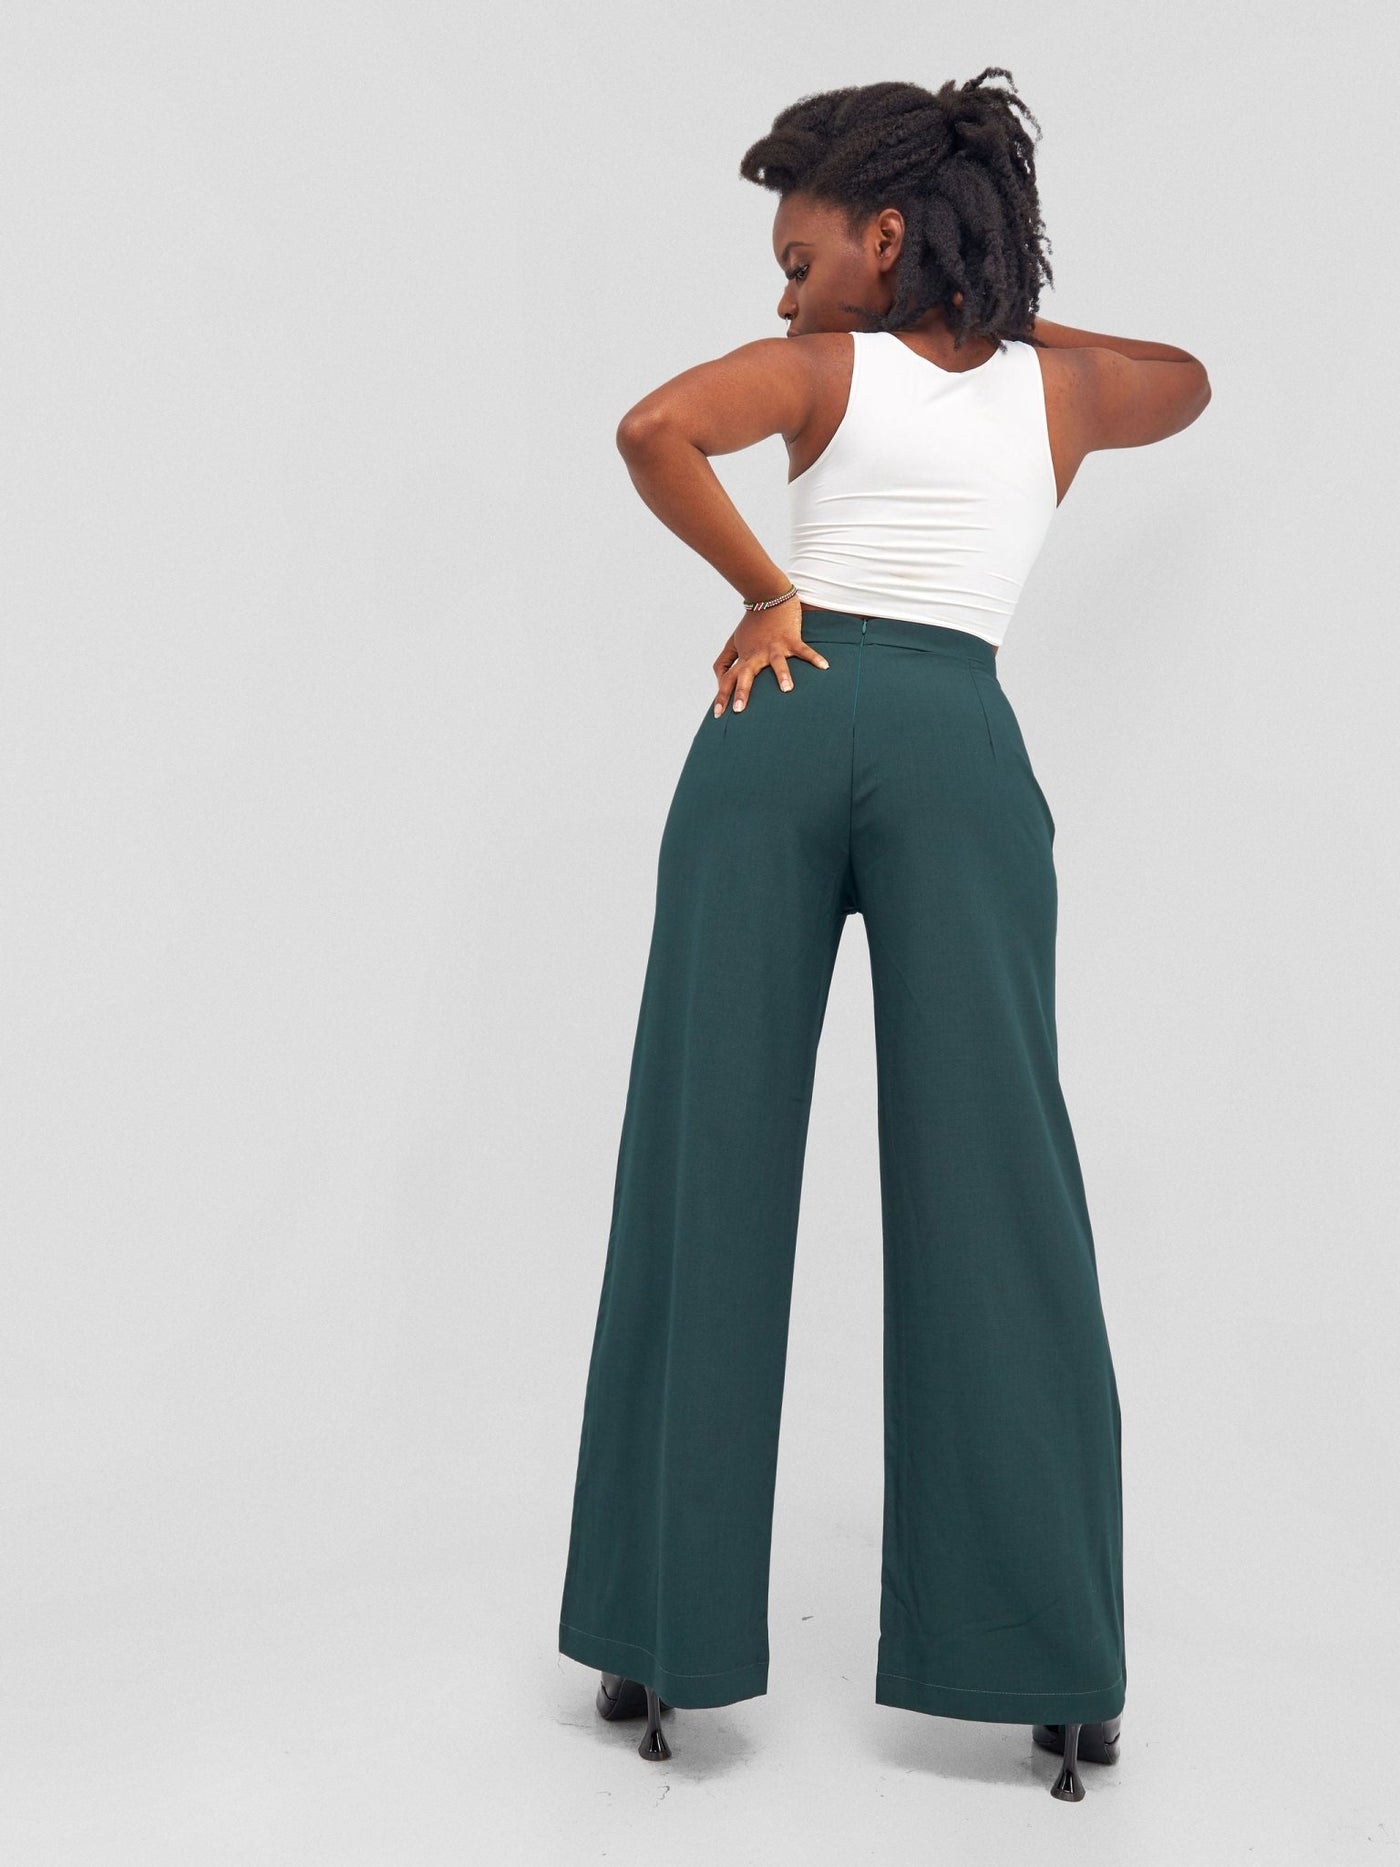 Anika Straight Leg Dress Pants With Zipper At Back - Dark Green - Shopzetu